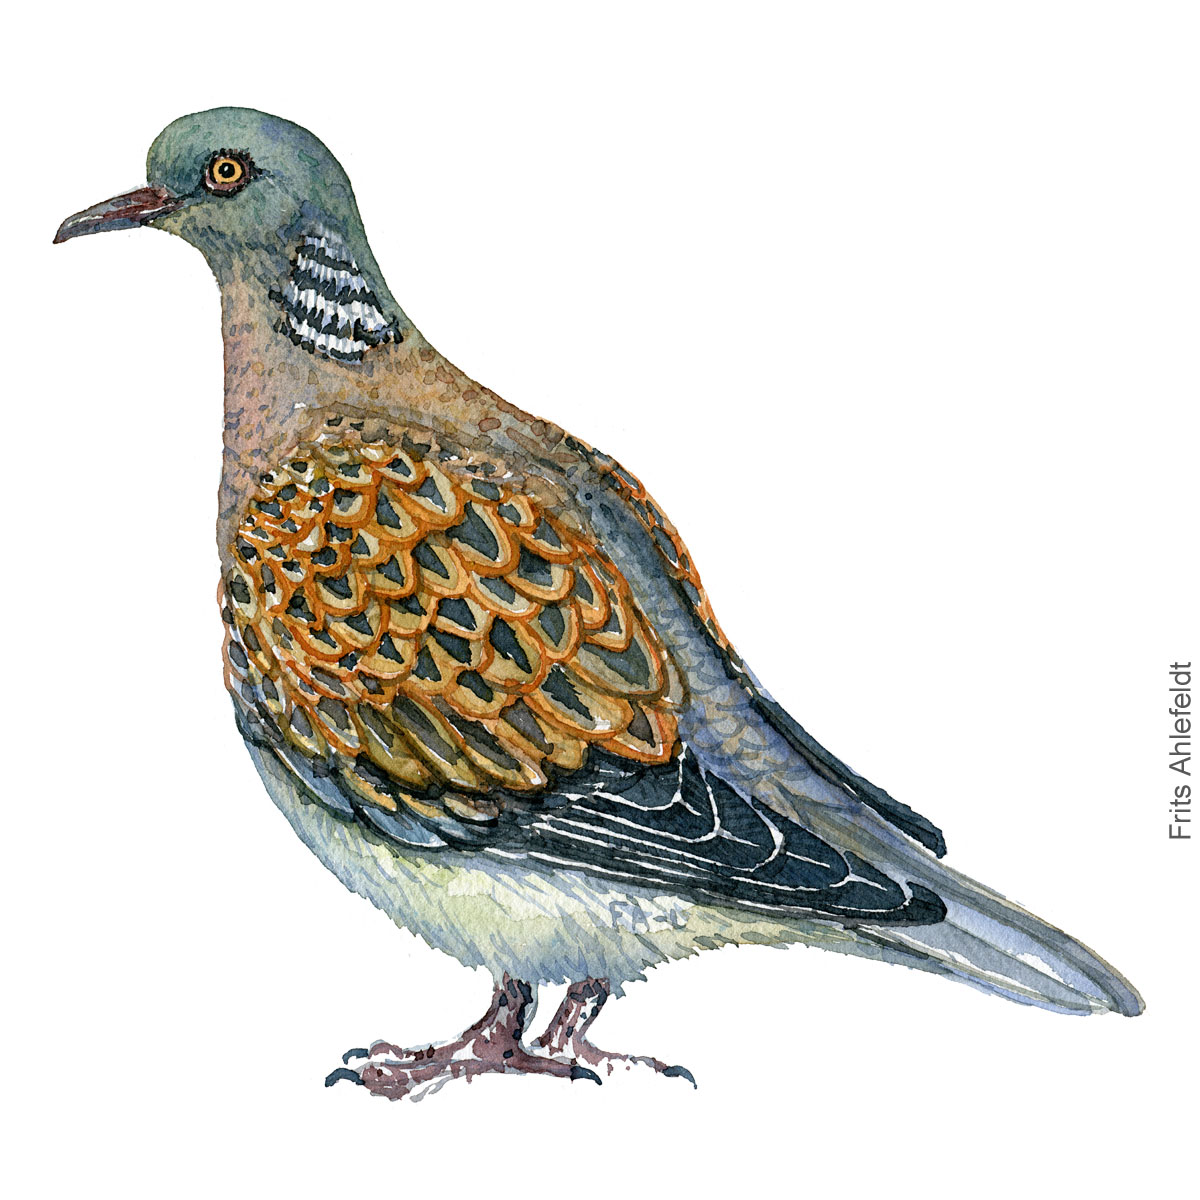 European turtledove, Turteldue akvarel. Watercolor painting by Frits Ahlefeldt